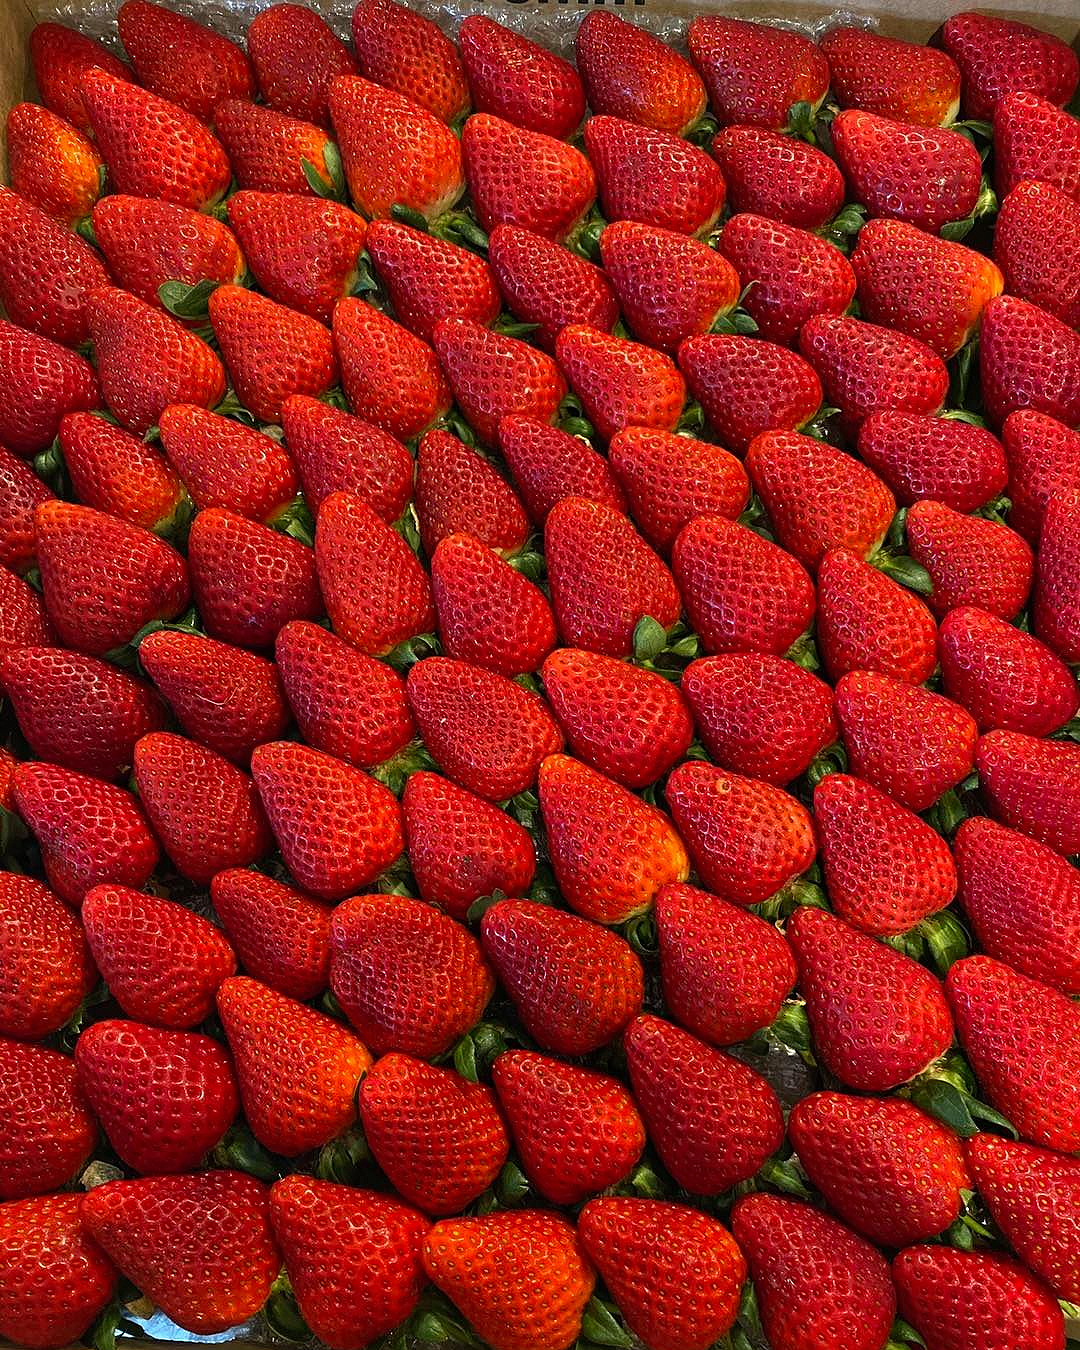 Strawberries upon strawberries at Bell's Berries